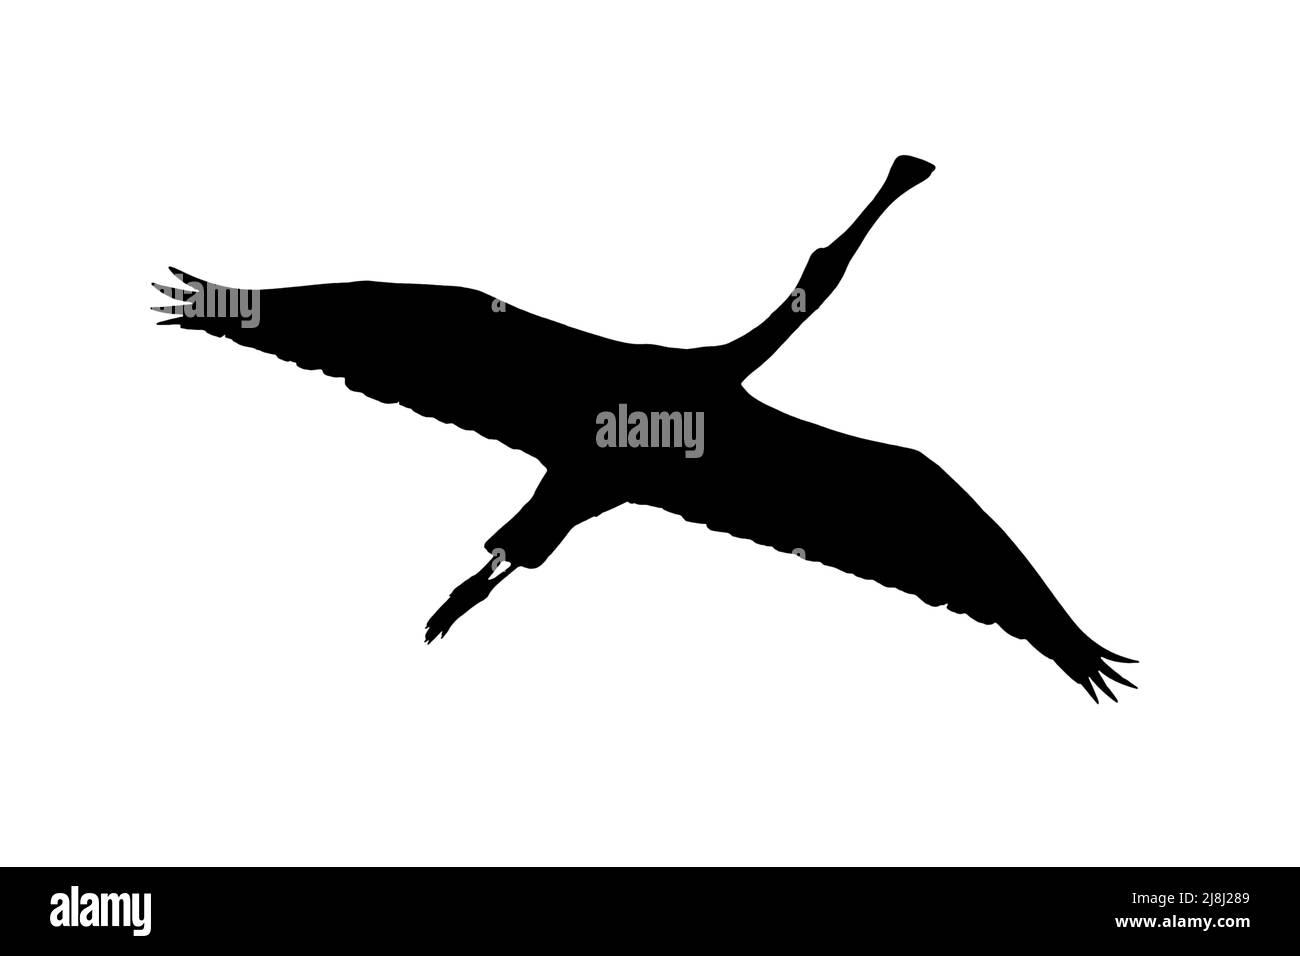 Silueta de pico de pico eurasiático (Platalea leucorodia) en vuelo contorneado sobre fondo blanco para mostrar alas, cabeza y cola formas Foto de stock